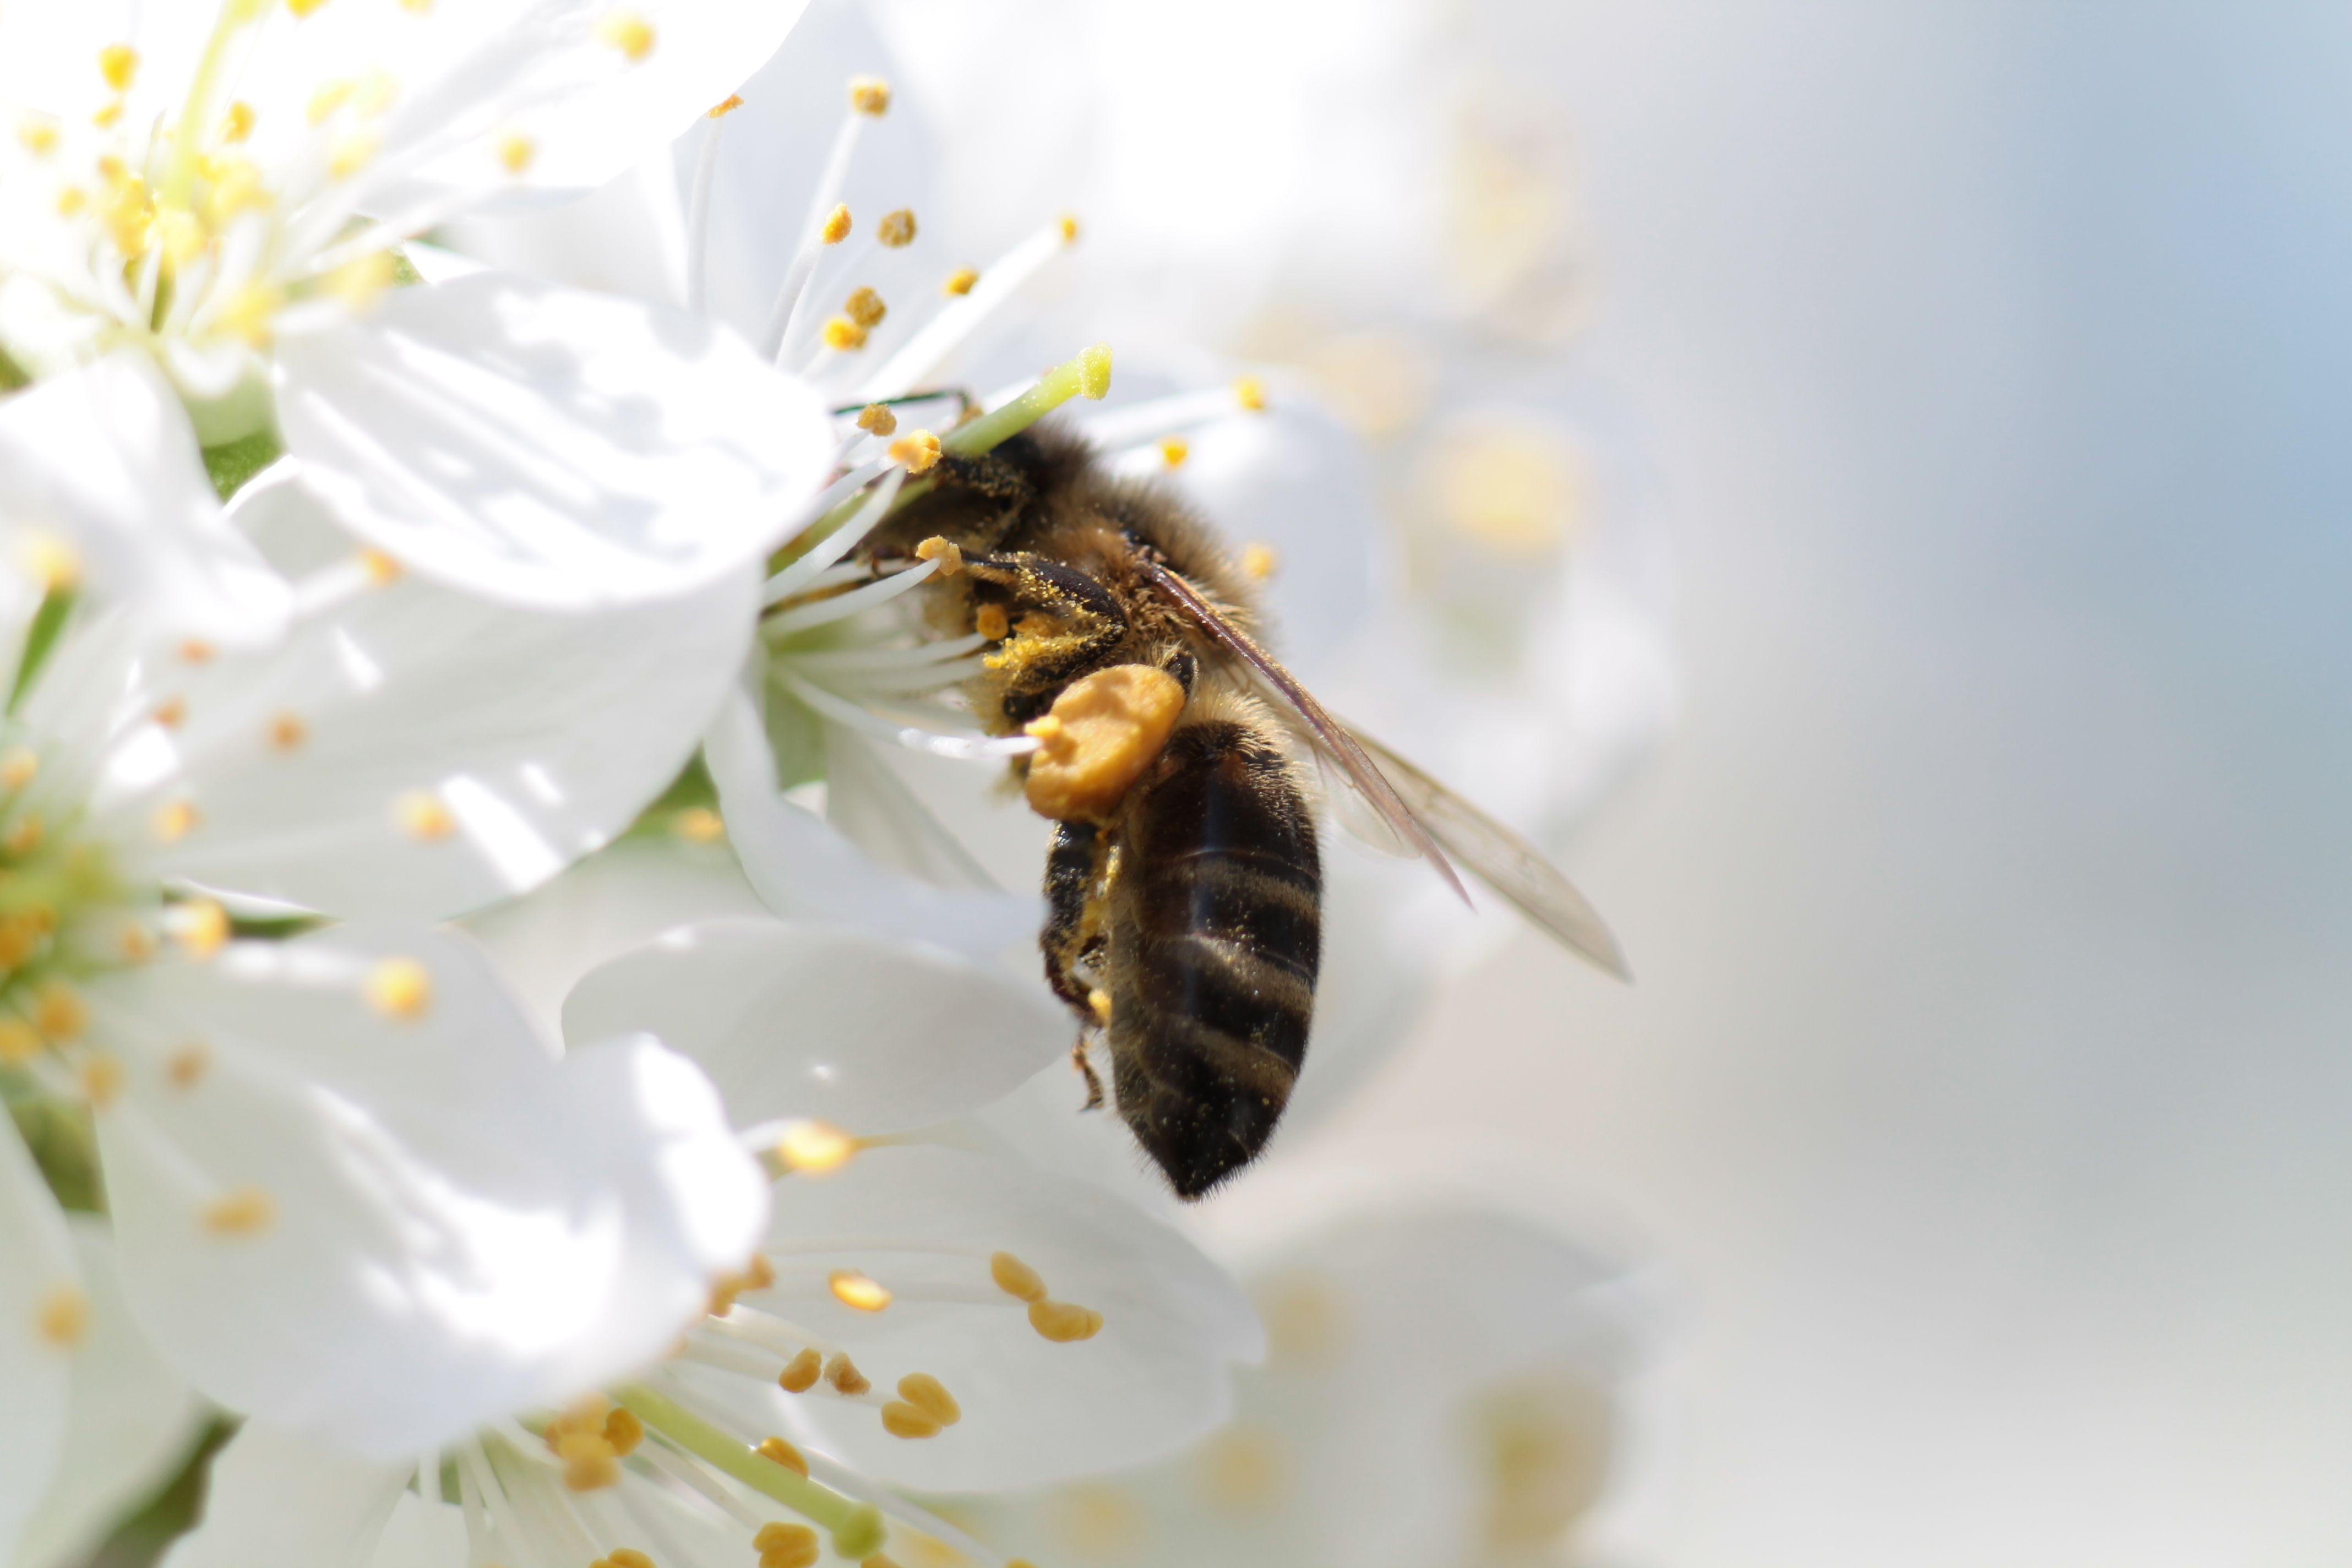 Hình nền 4272x2848 Honeybee.  Honeybee hình nền, Honeybee Background and